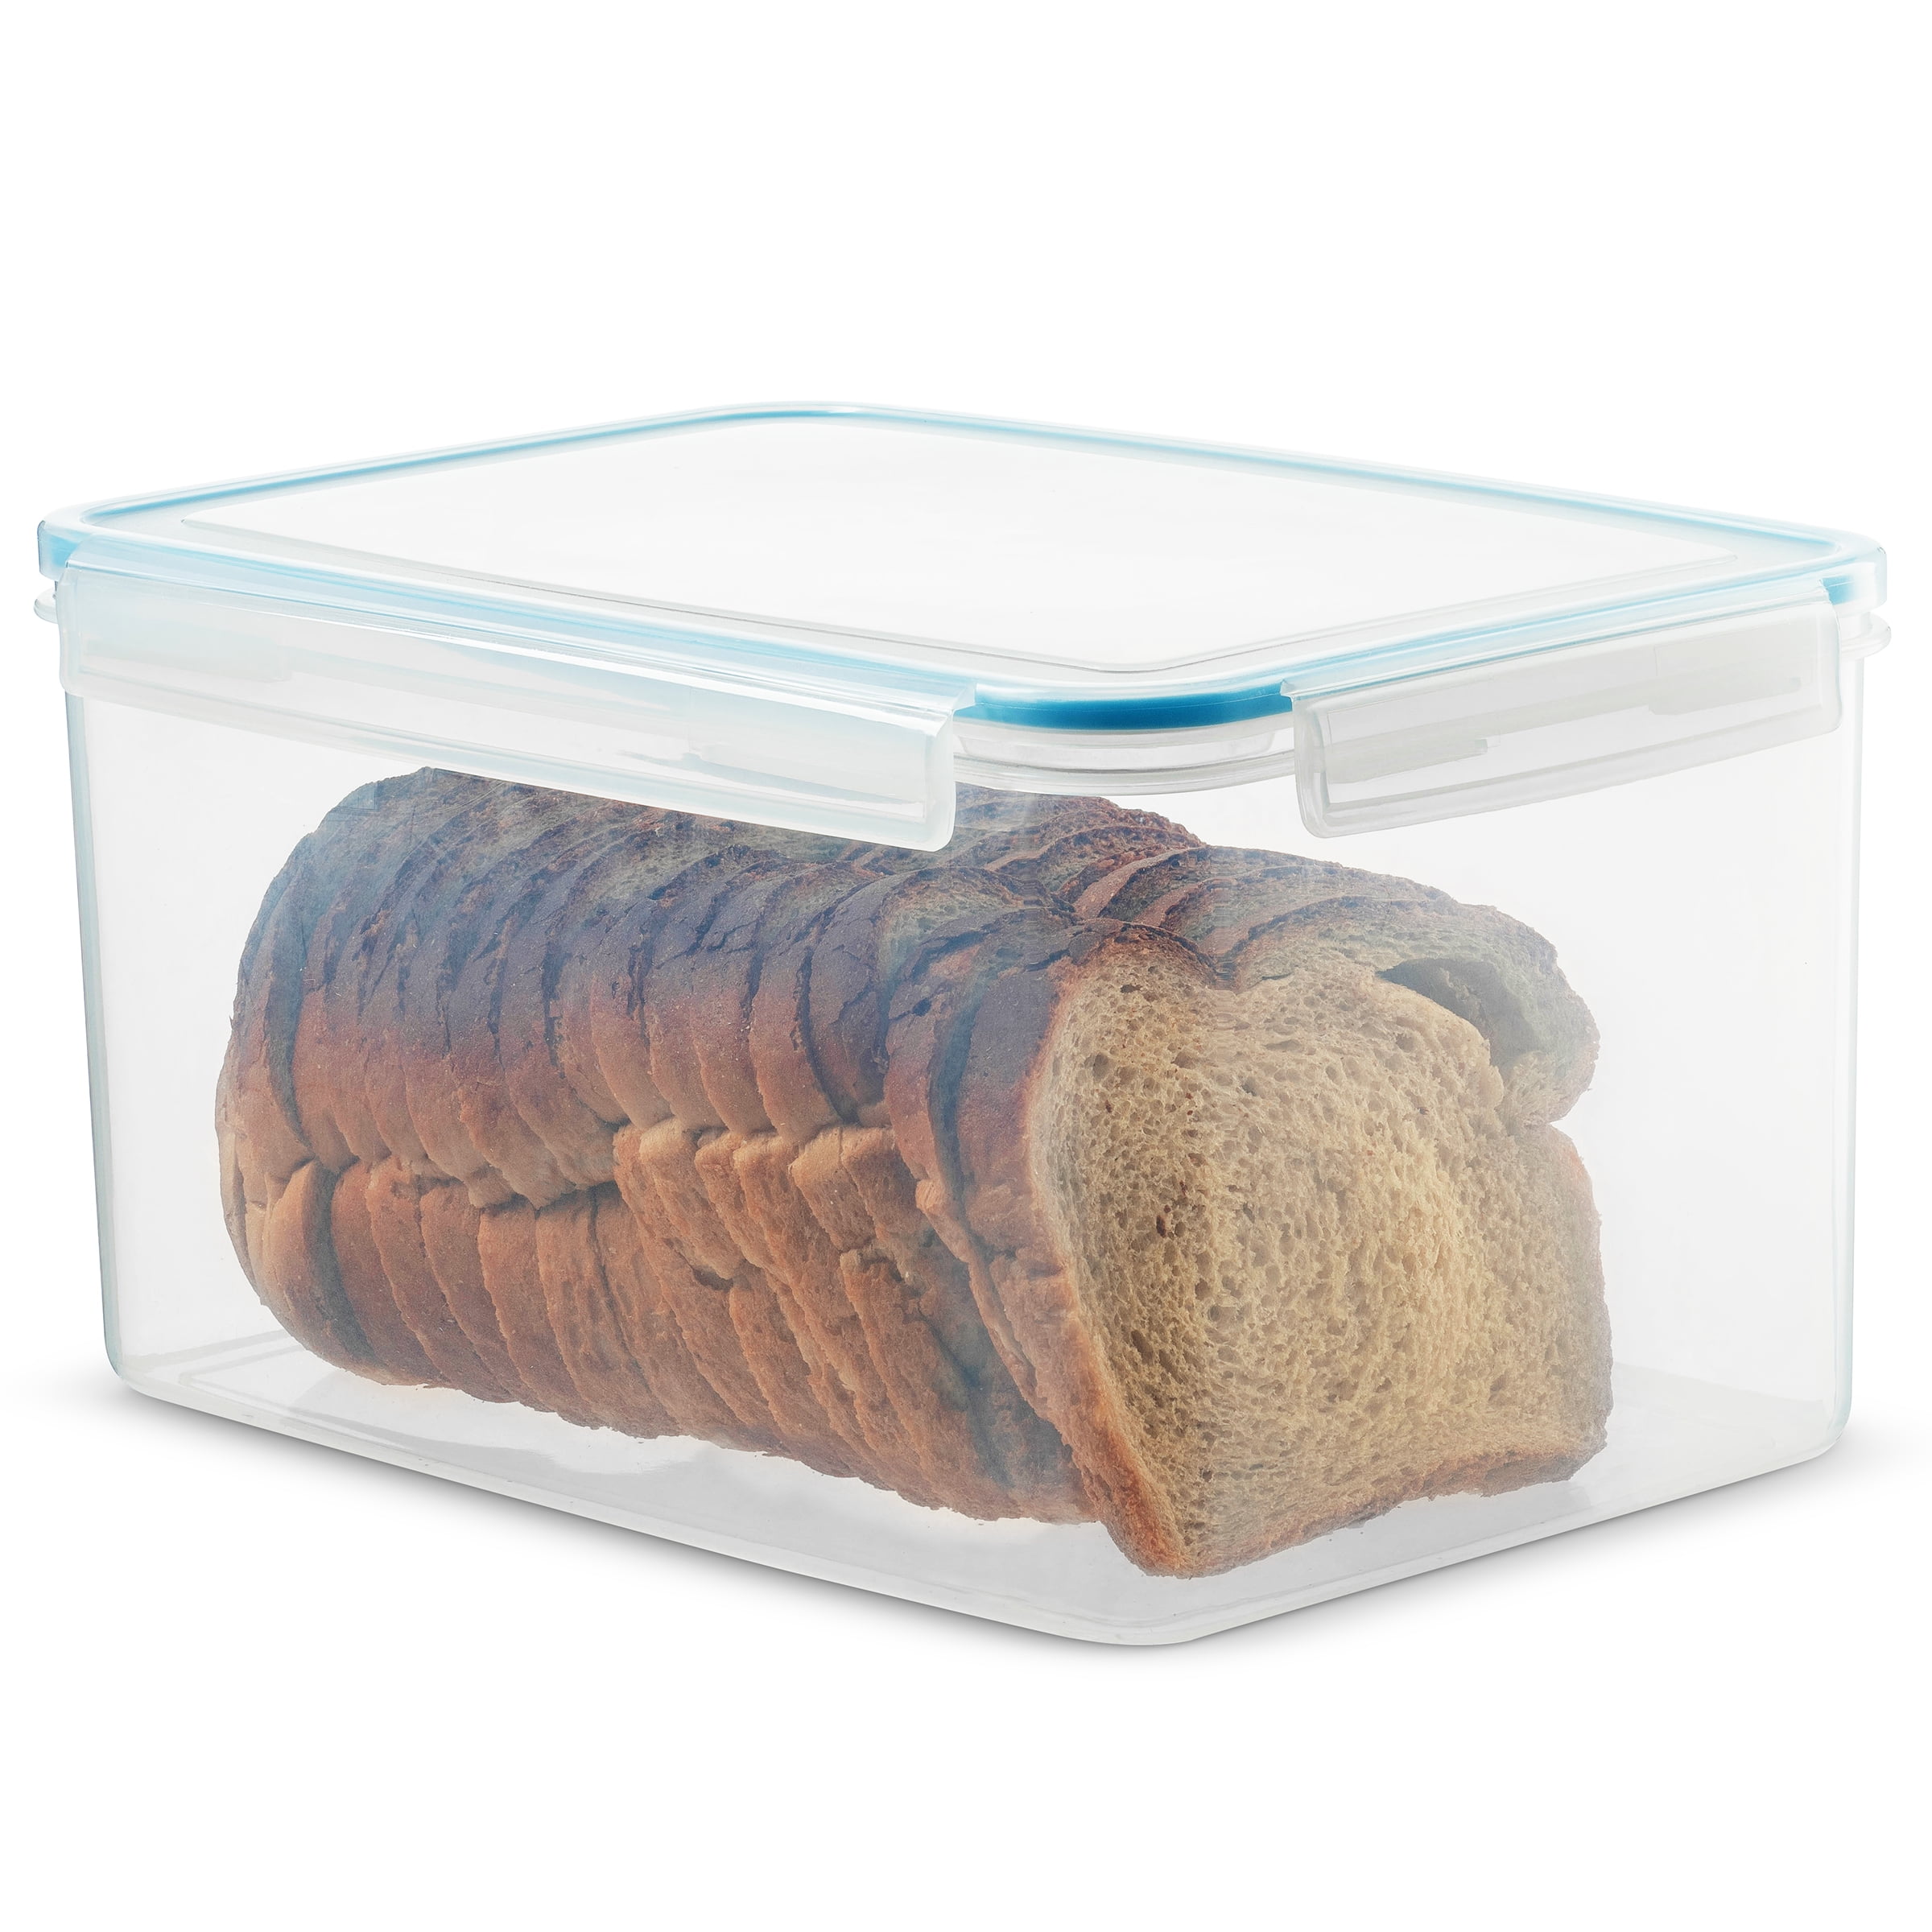 Komax Biokips Sandwich Bread Box Airtight, Leakproof